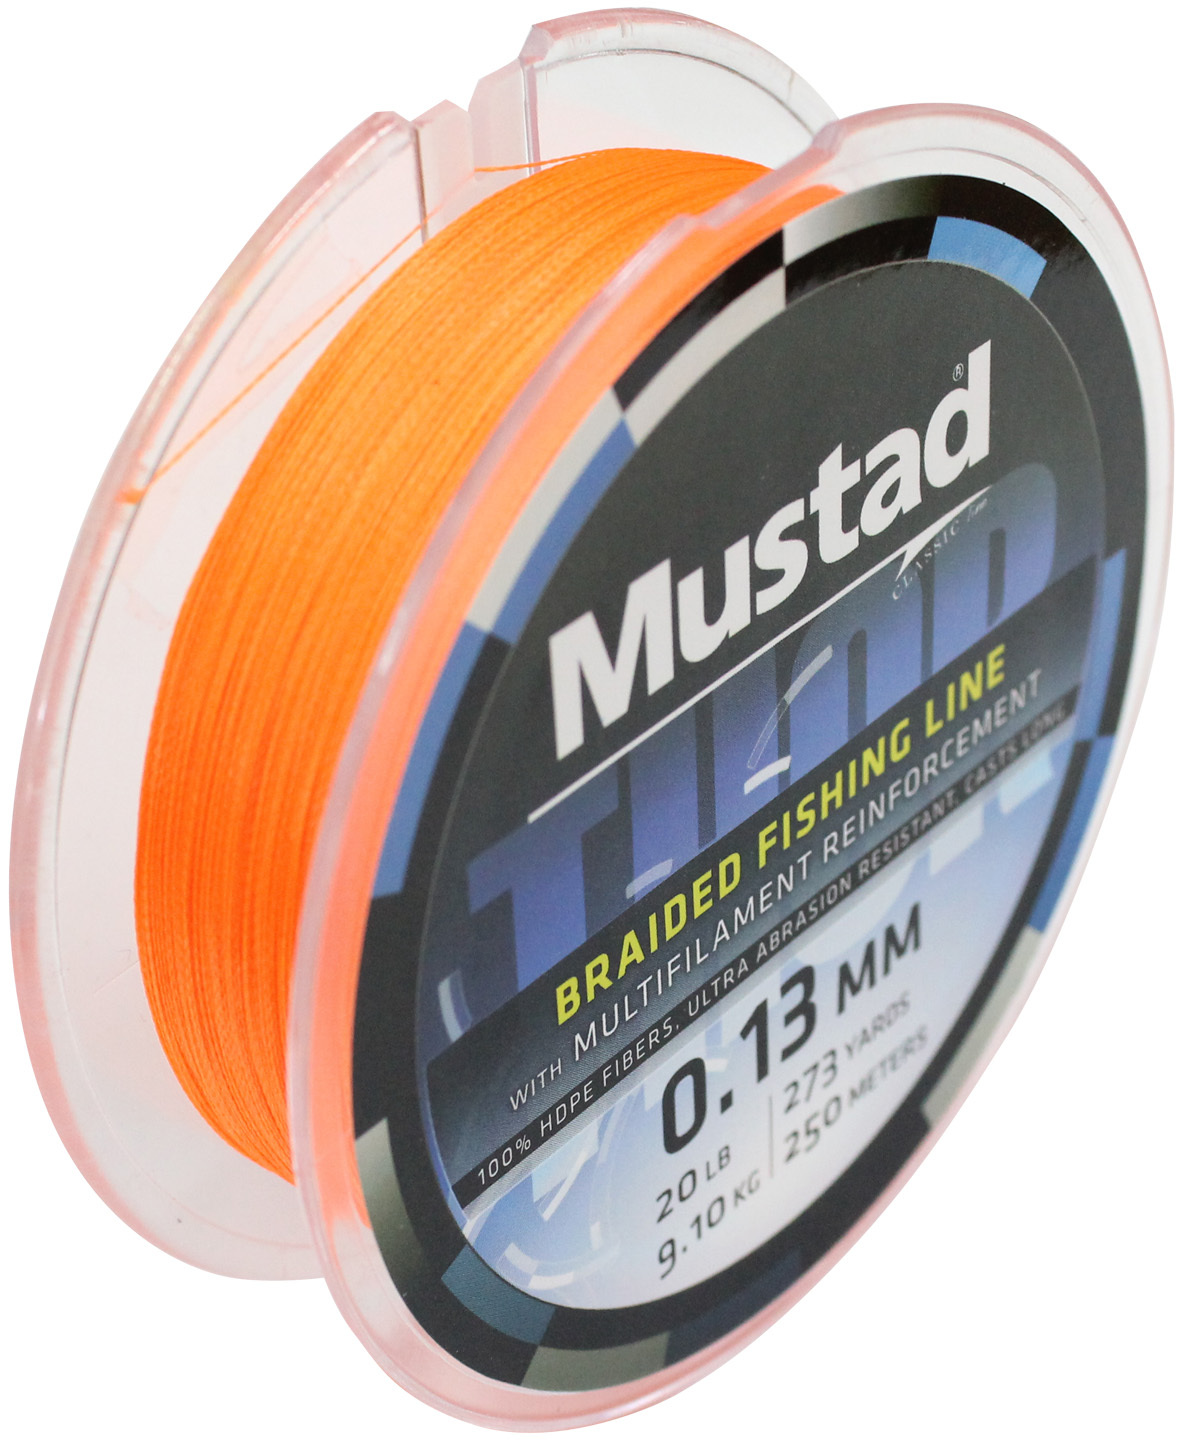 1 x 250m Spool of Mustad Thor Braid - 4 Strand Hot Orange Braided